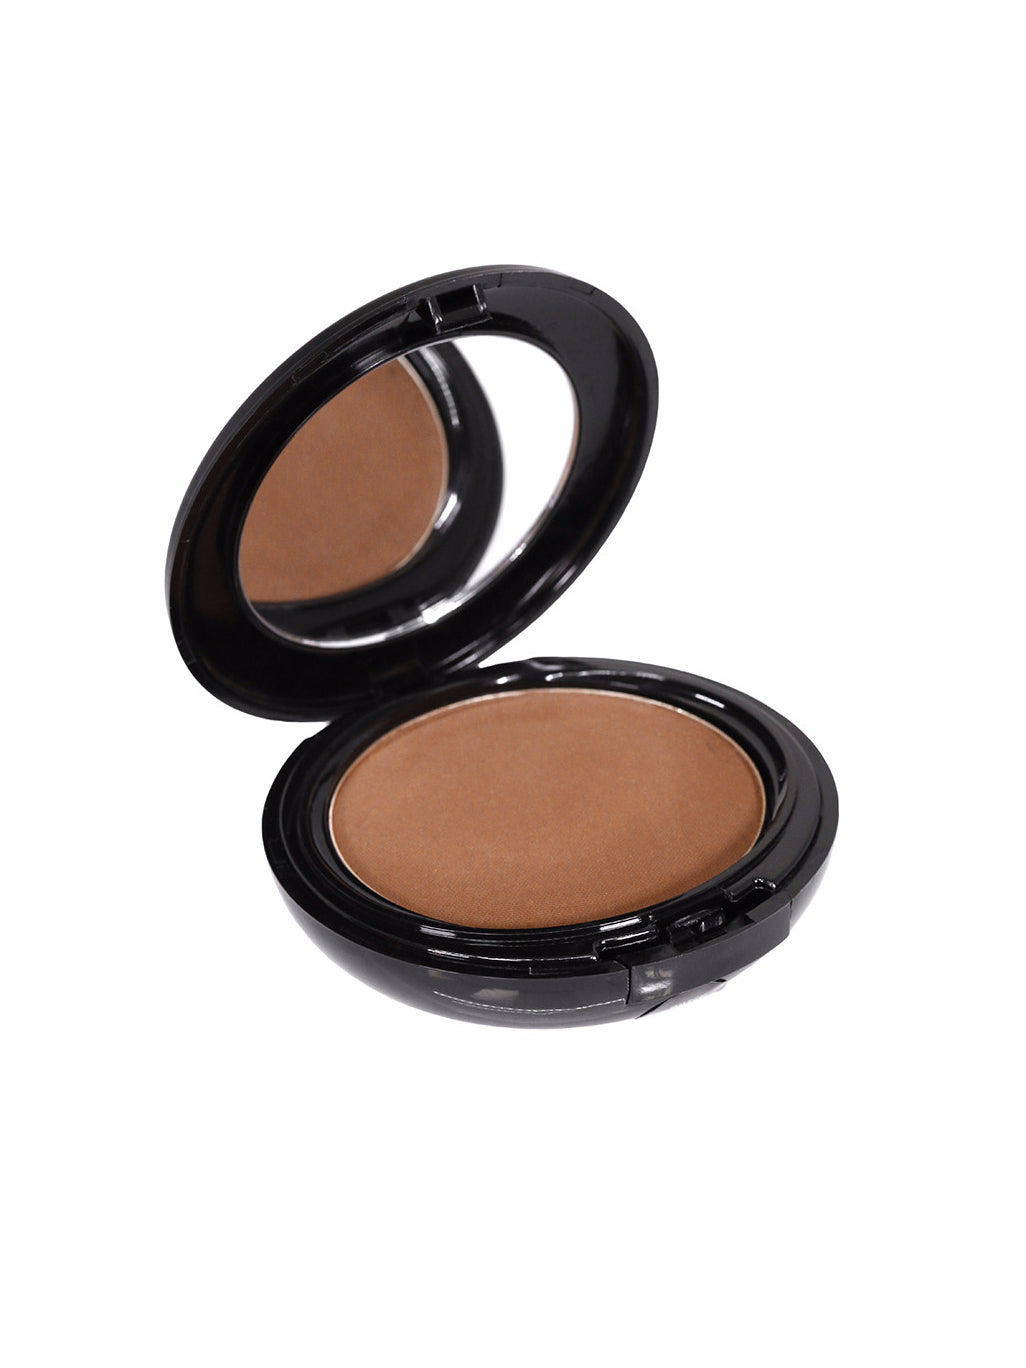 Men's brown powder foundation mirror compact cosmetics makeup